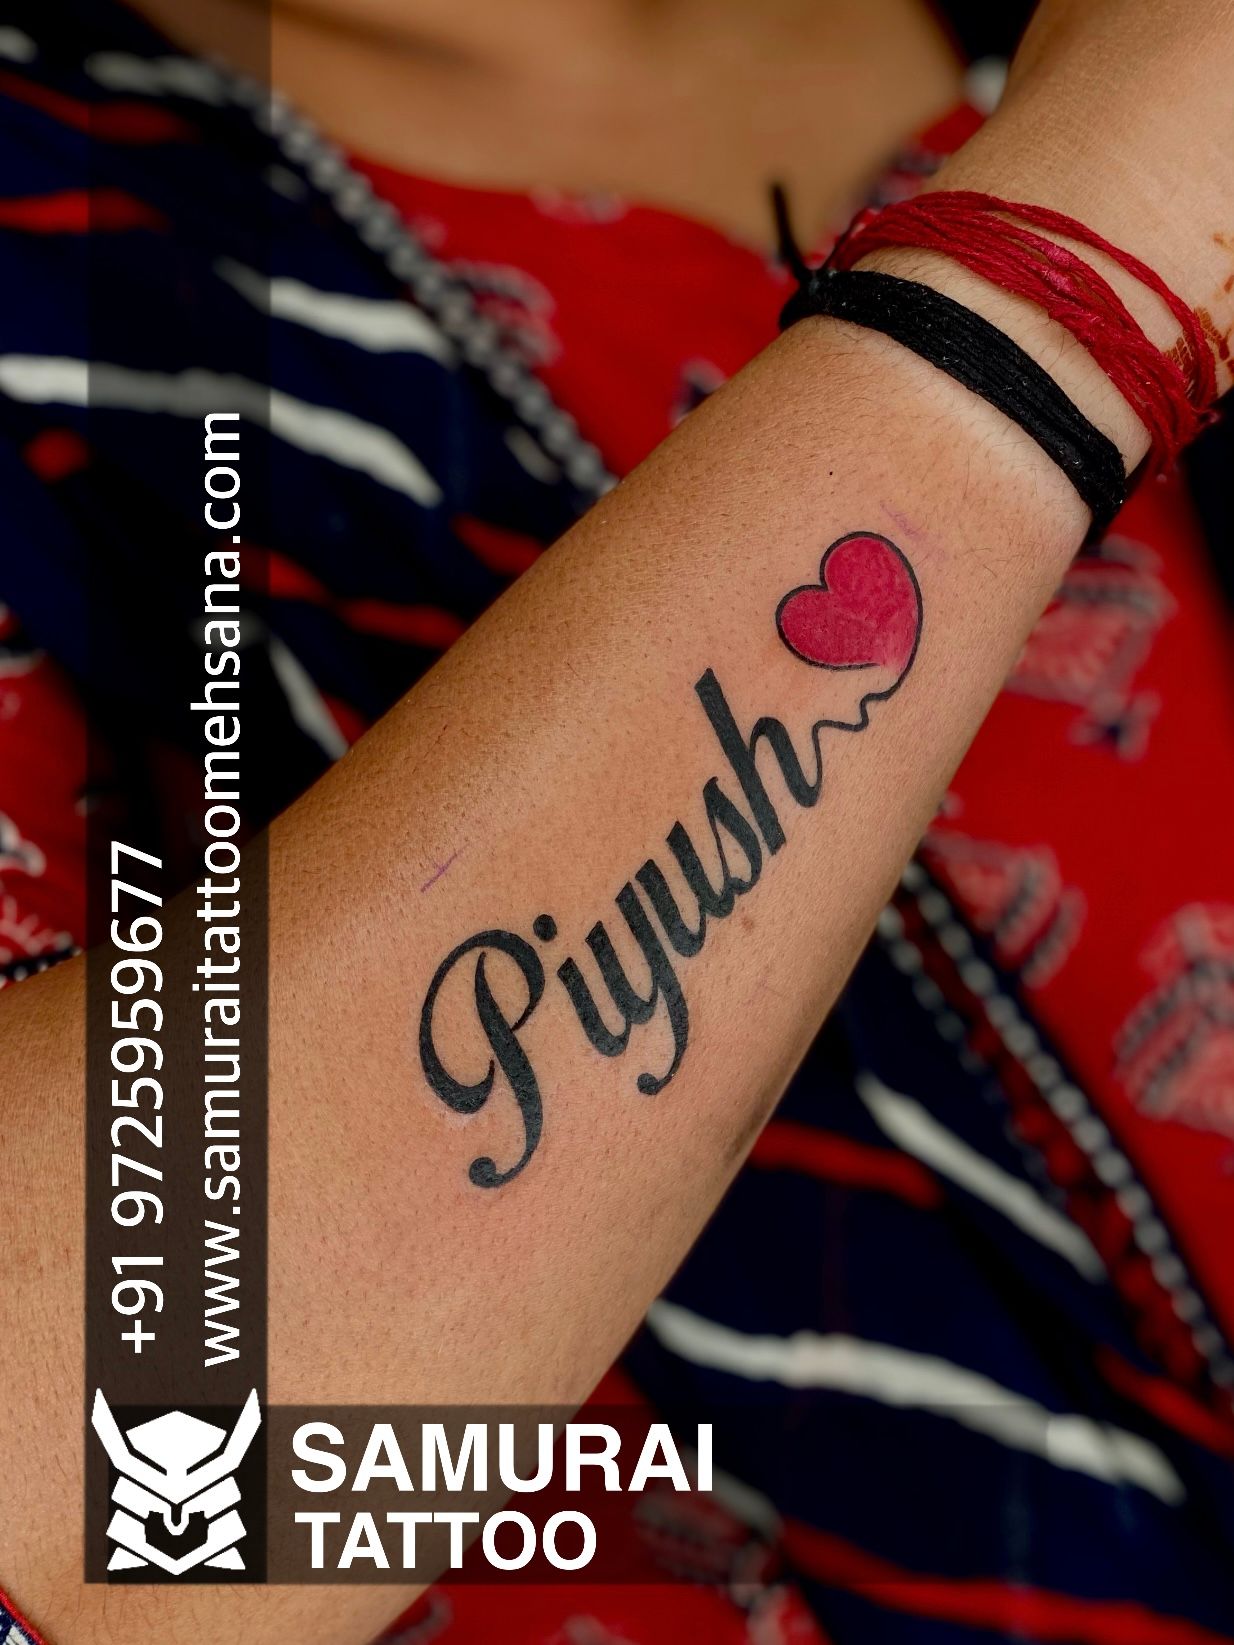 piyush logo. Free logo maker.